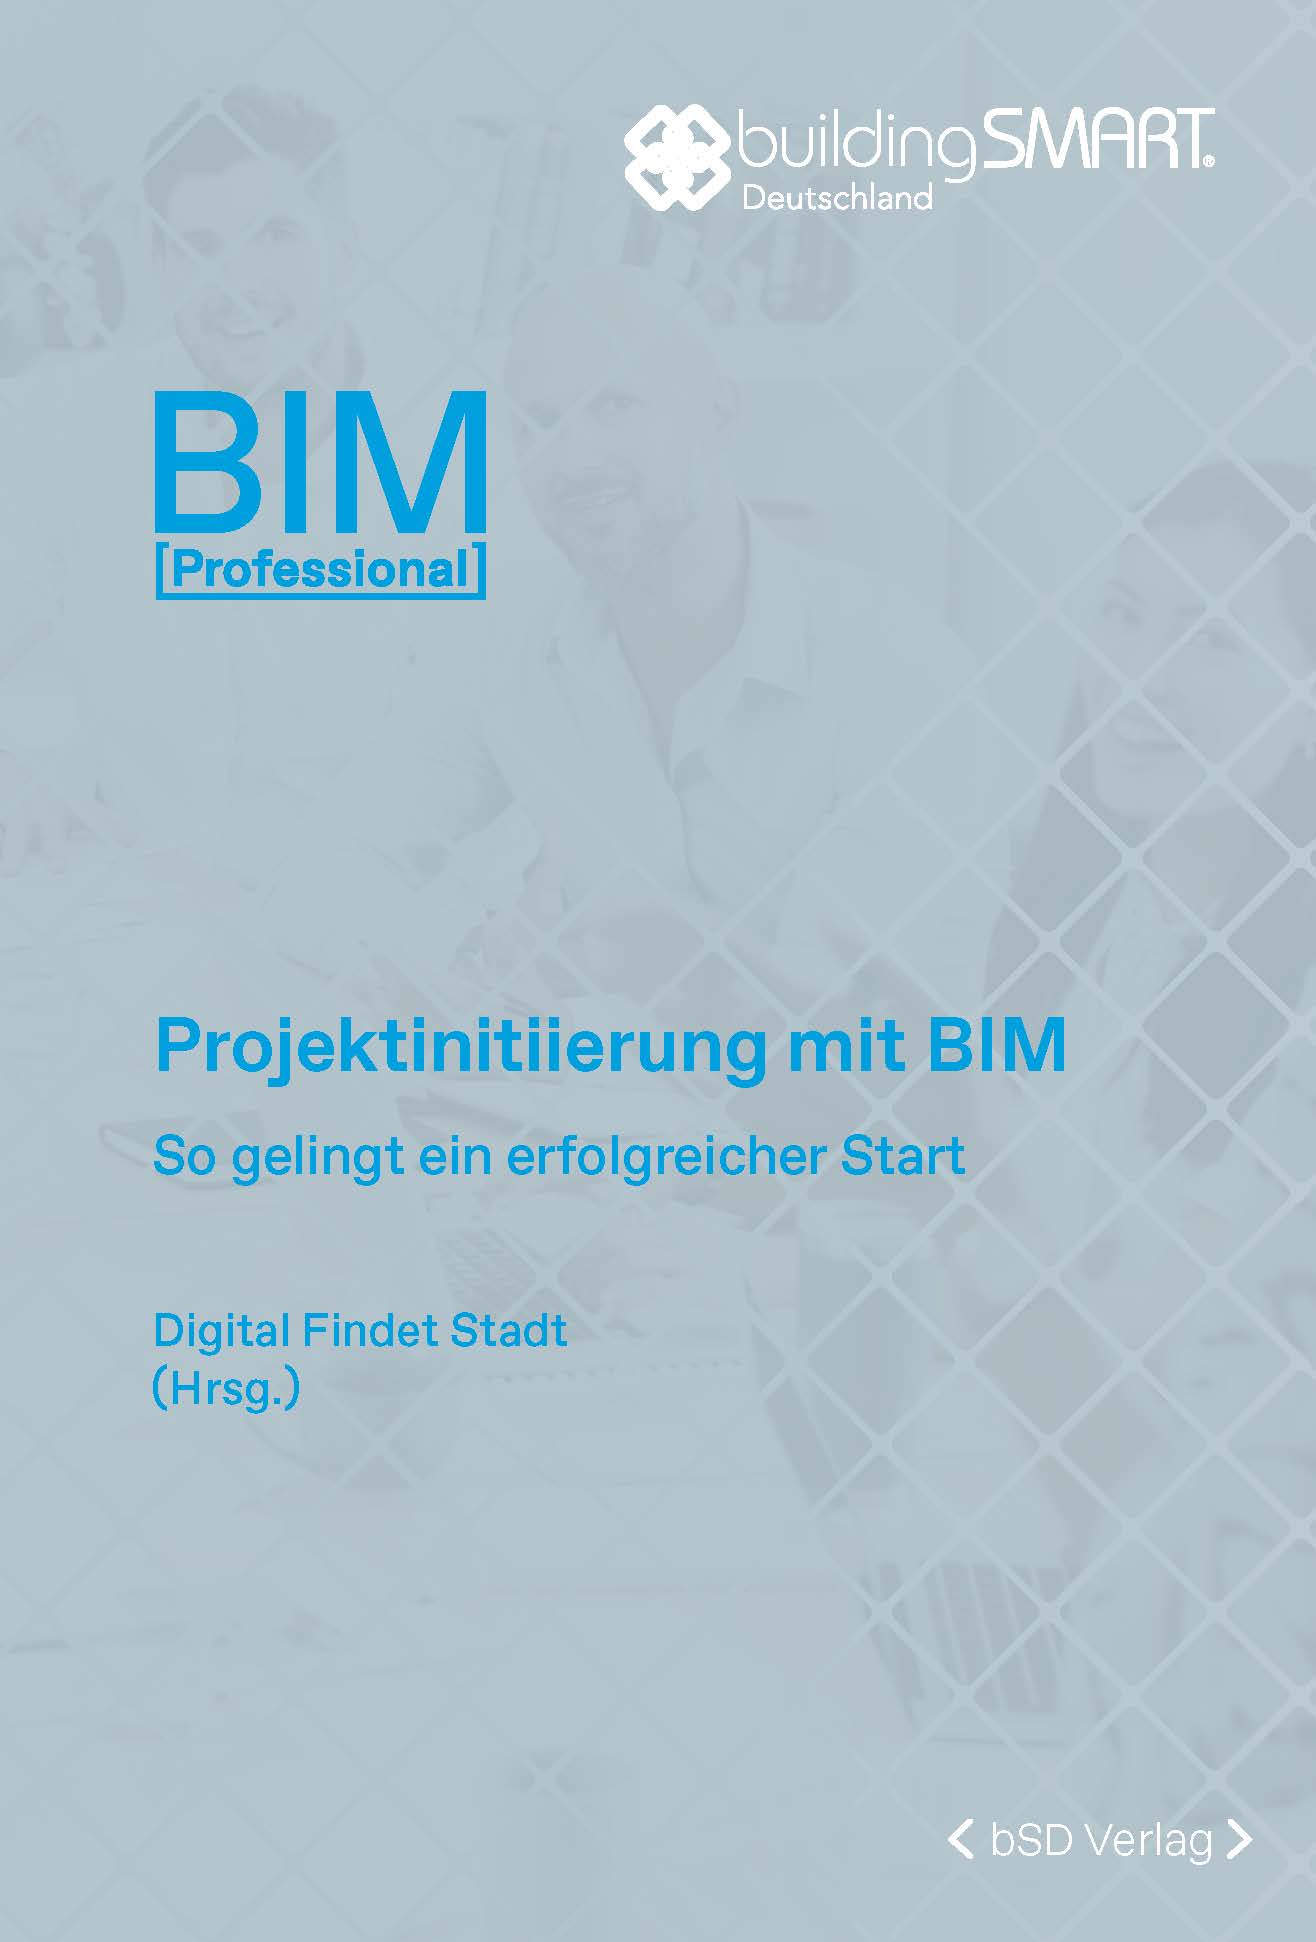 bSD Verlag/BIM Professional: Projektinitiierung mit BIM